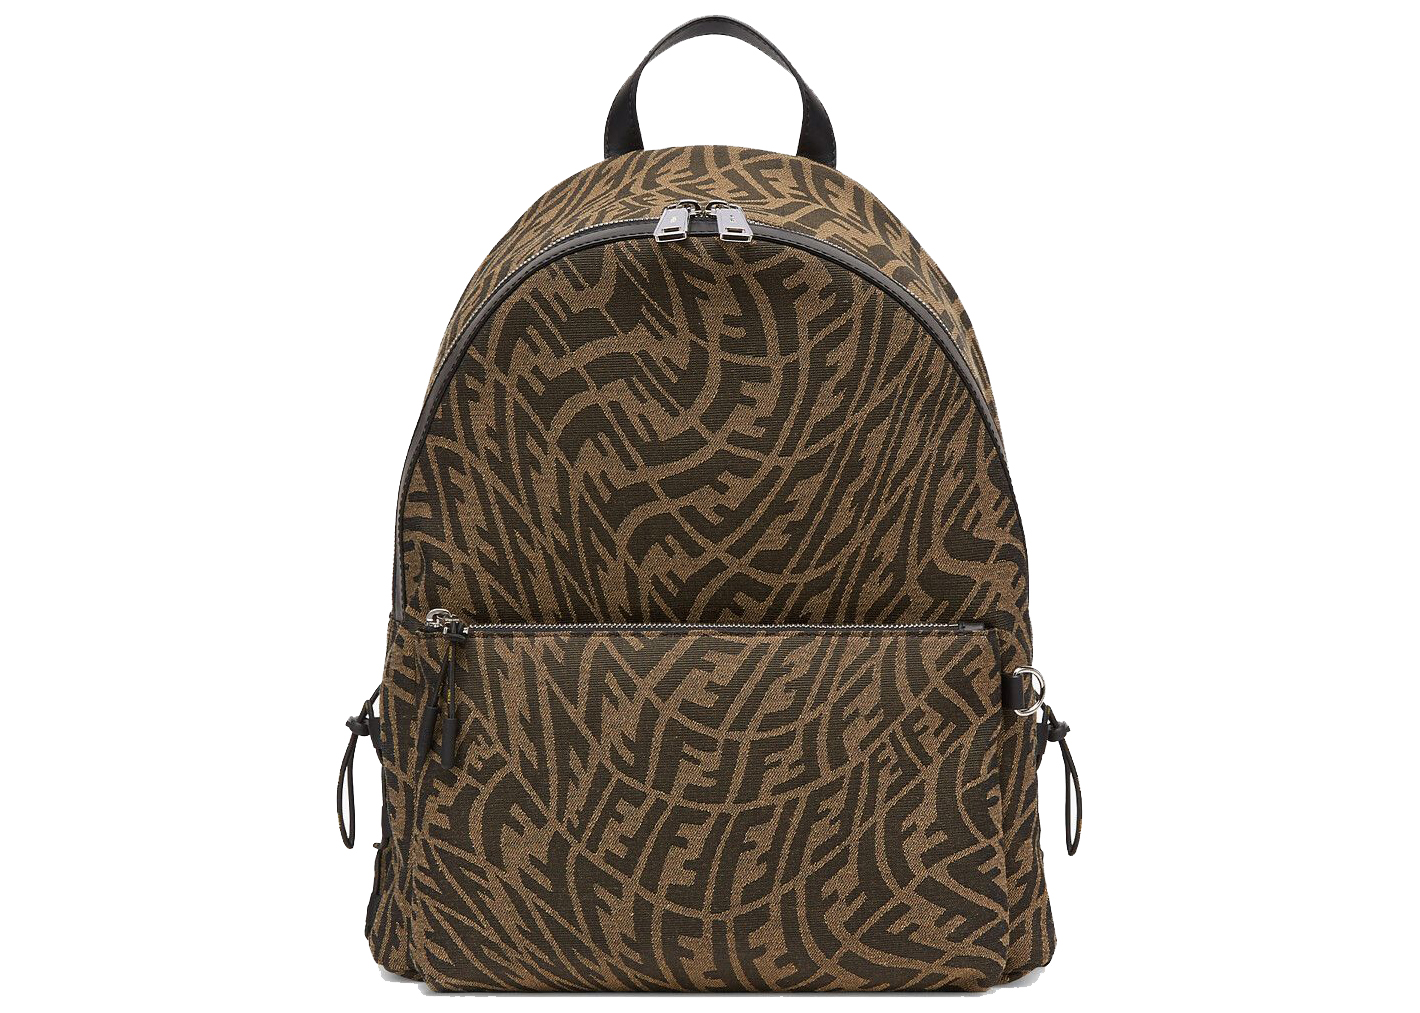 Fendi Fabric Backpacks for Women | Mercari